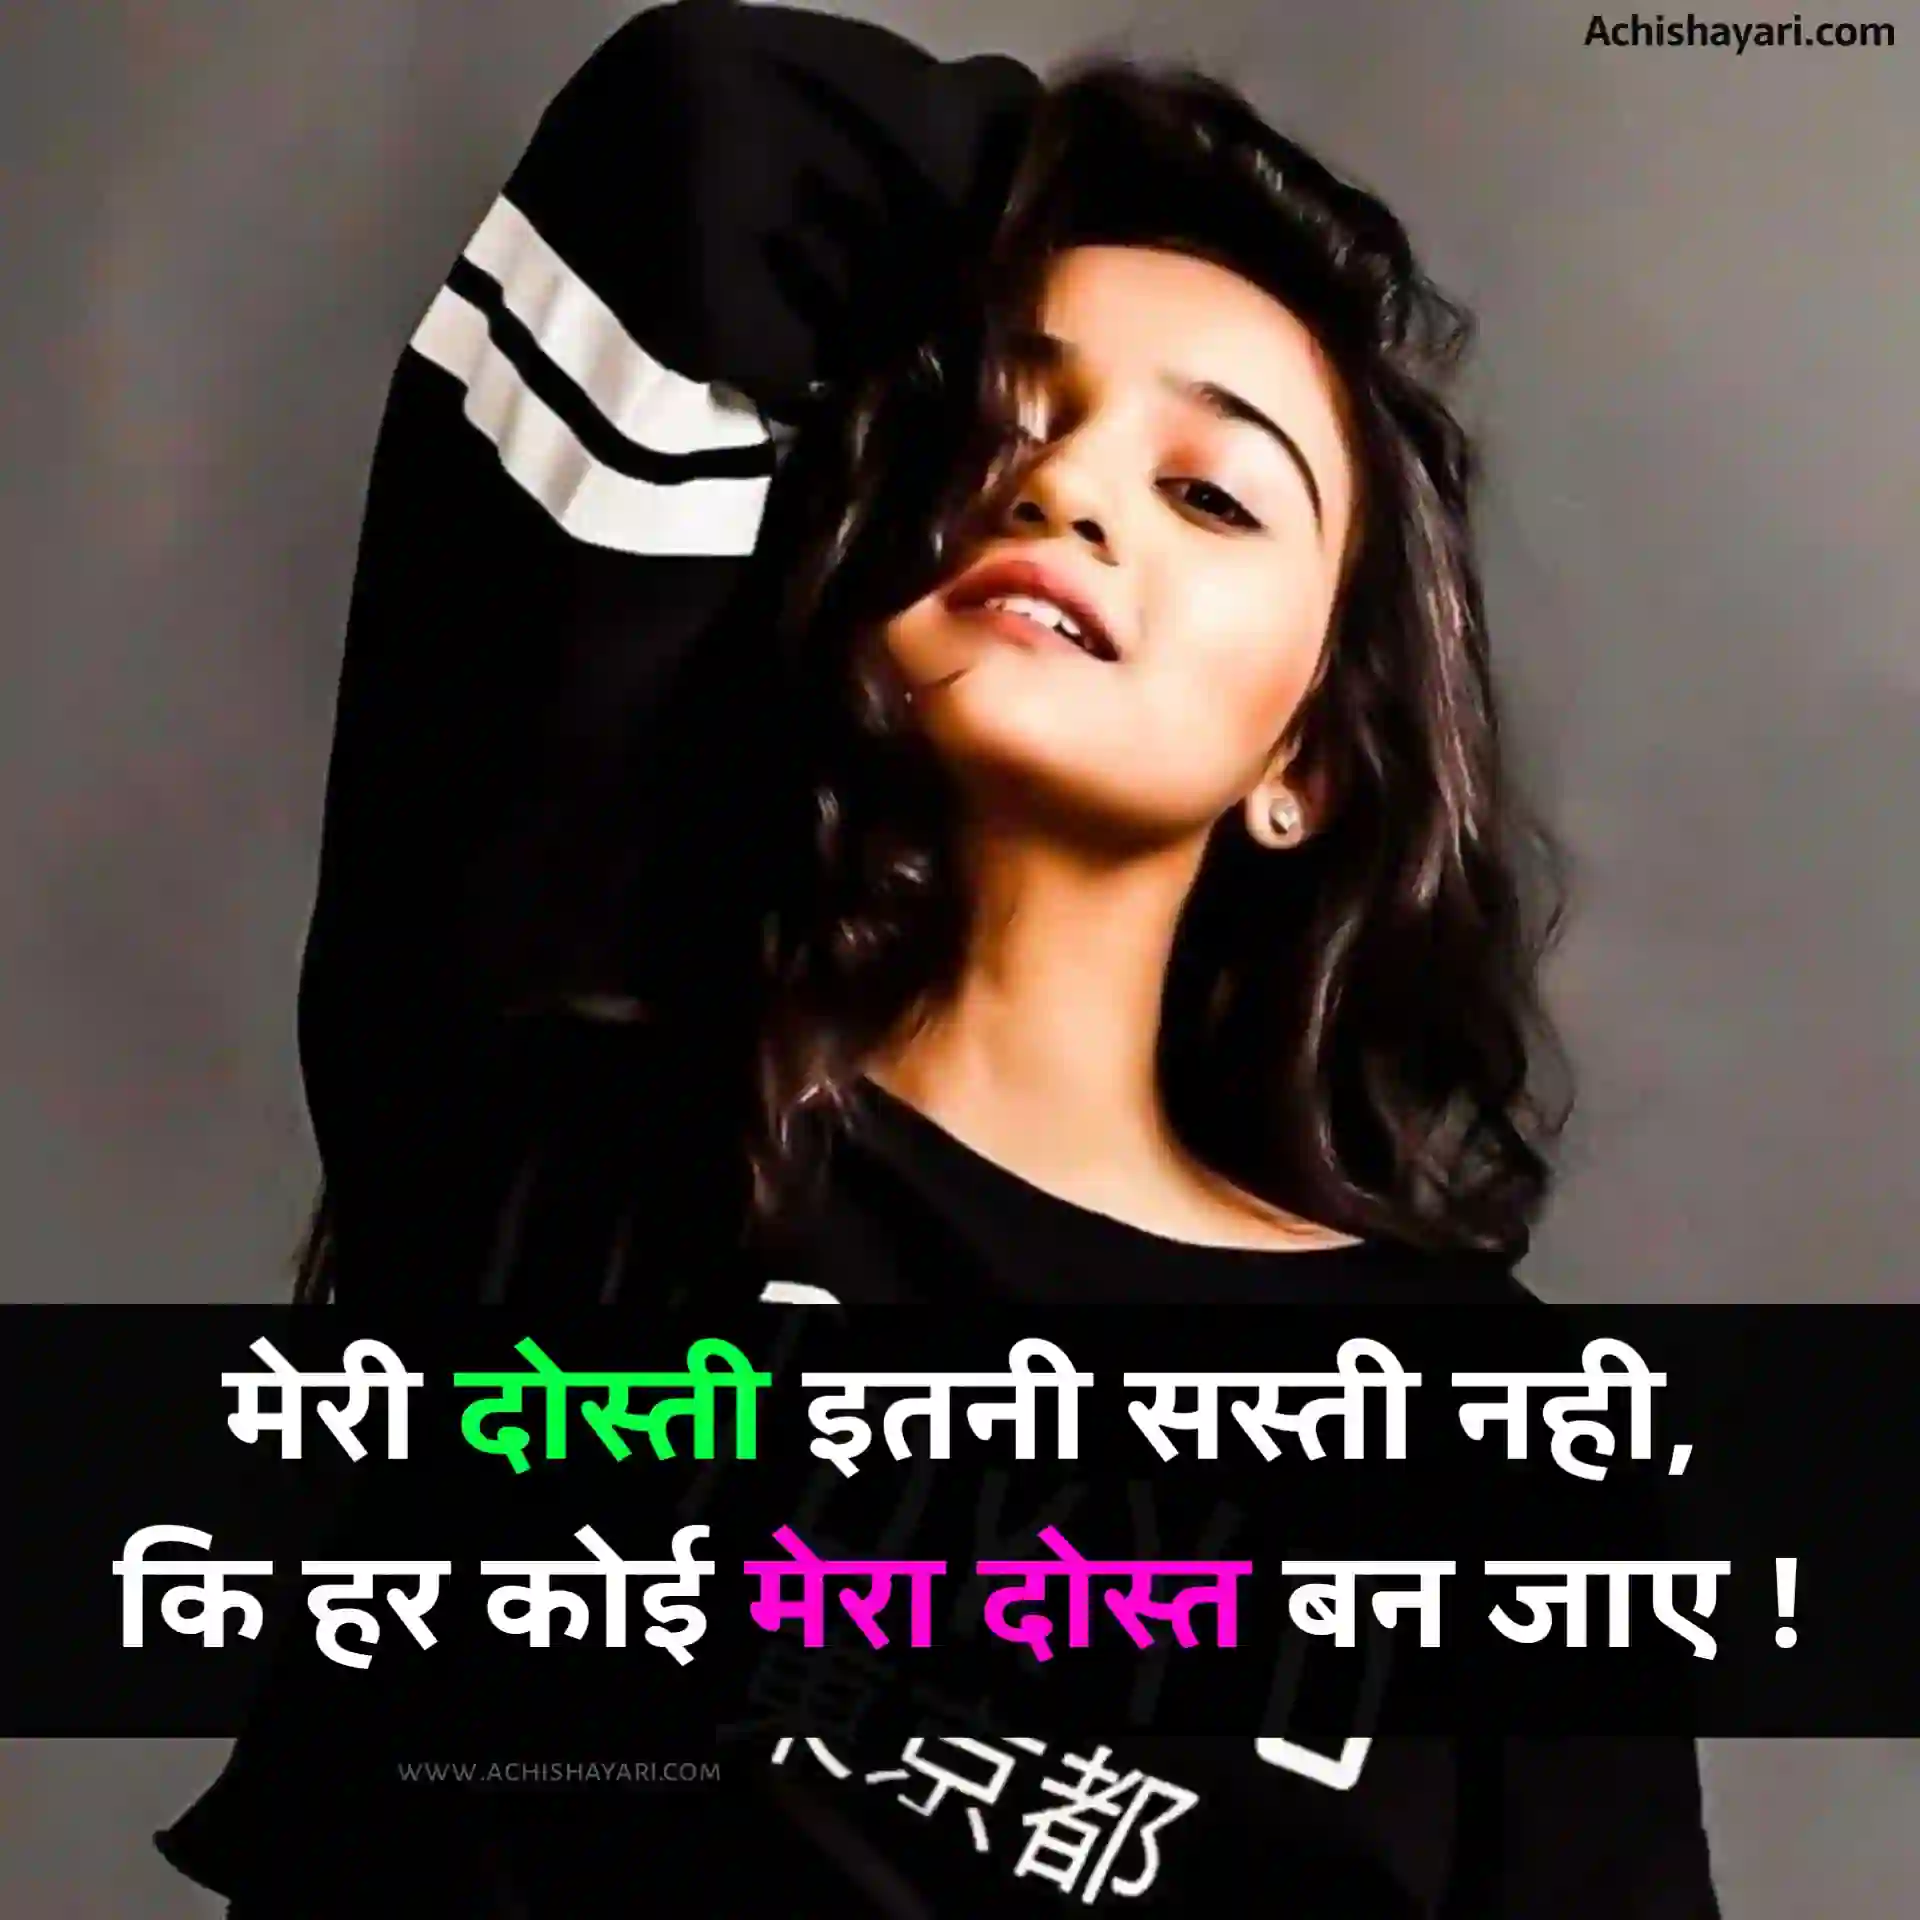 Girl Attitude Status in Hindi Image